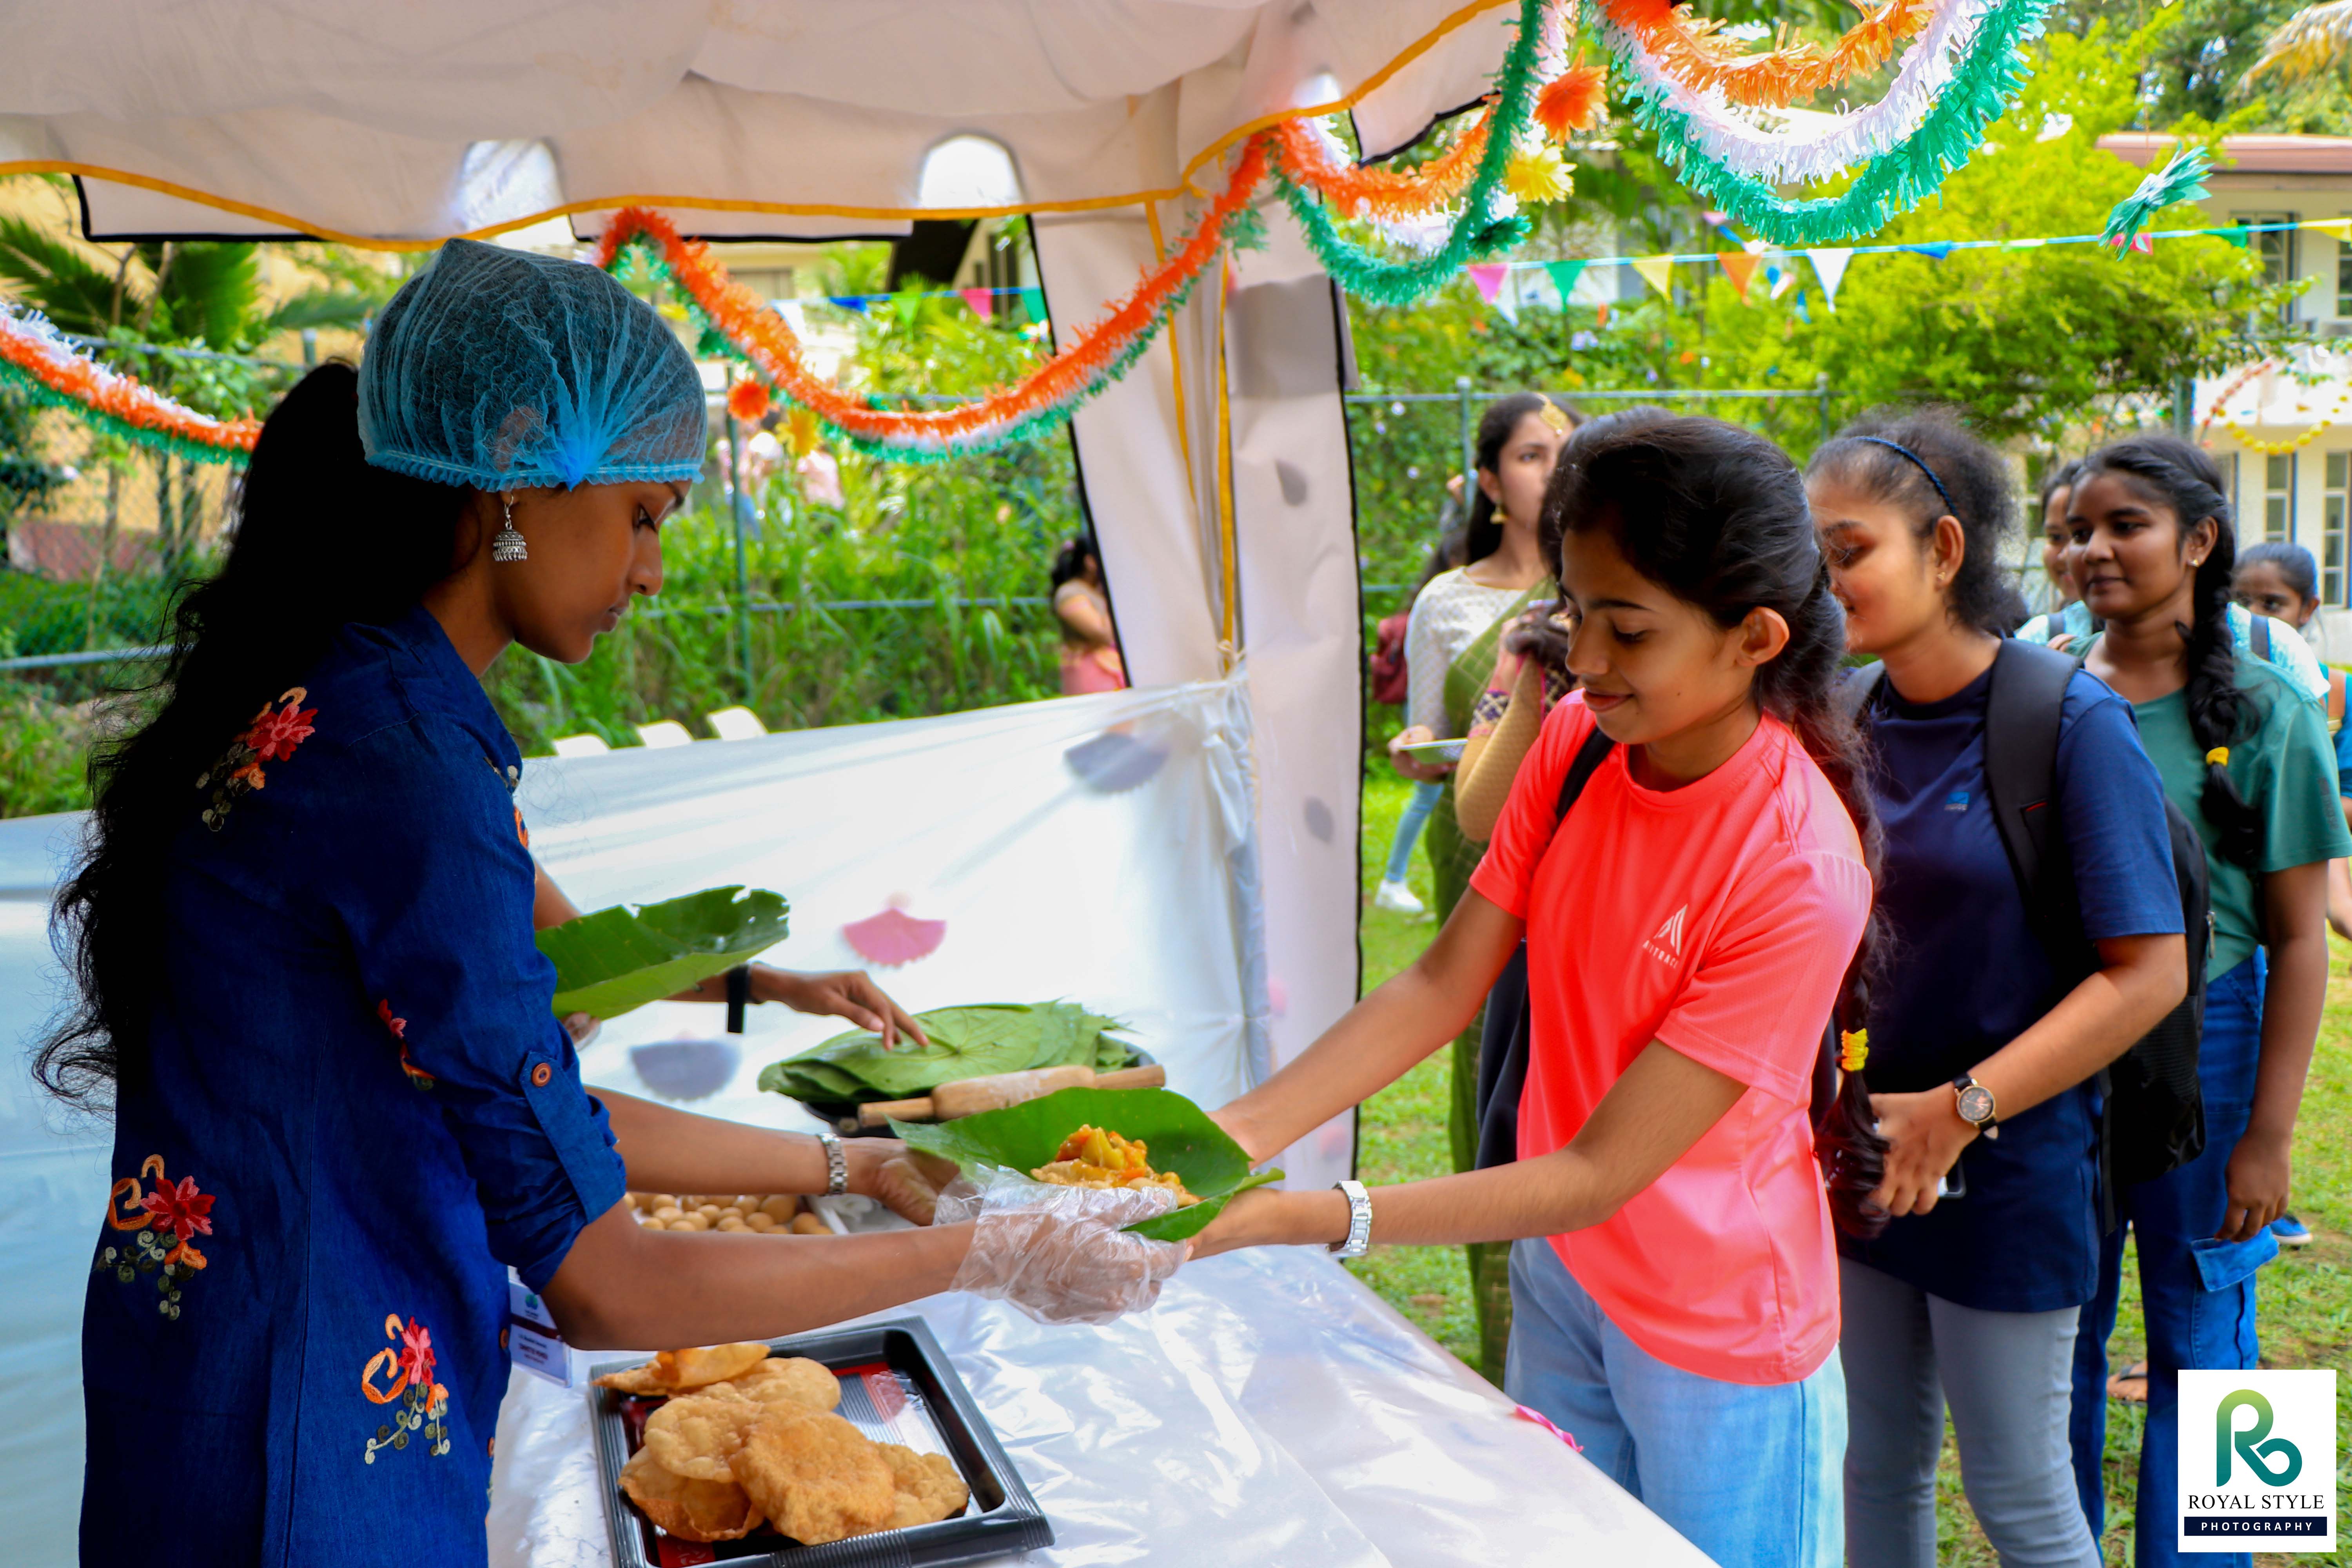 Indian Food Festival